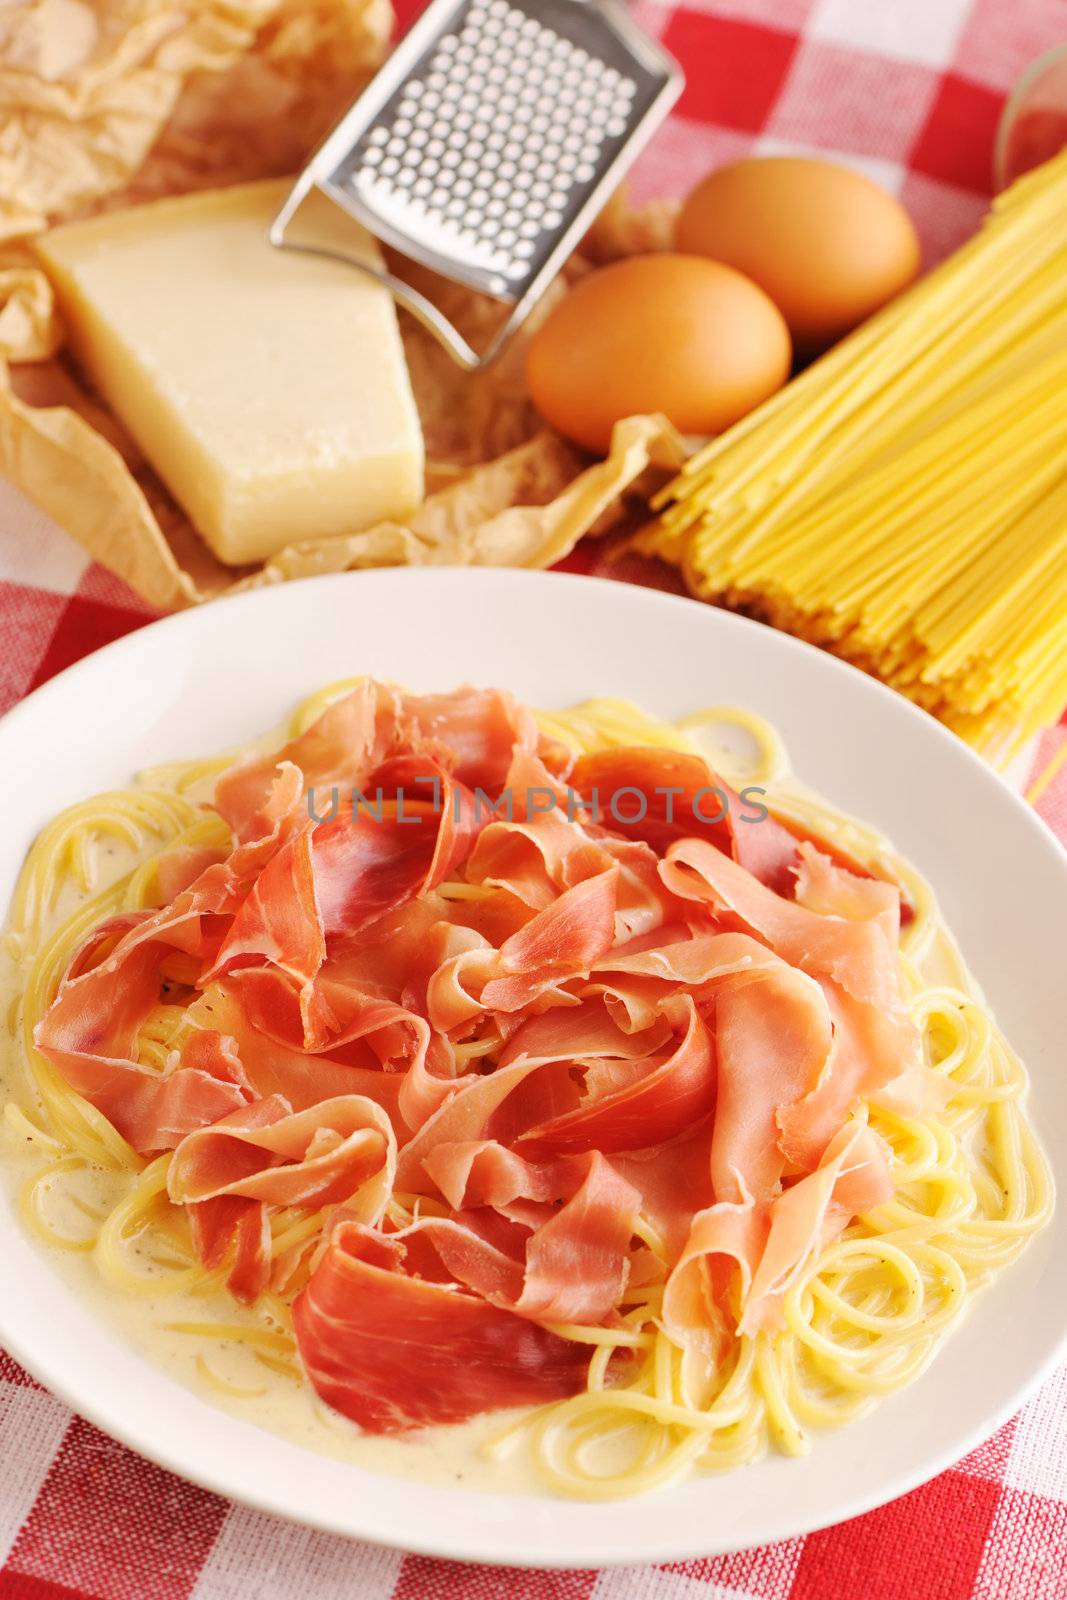 Pasta carbonara over red cloth